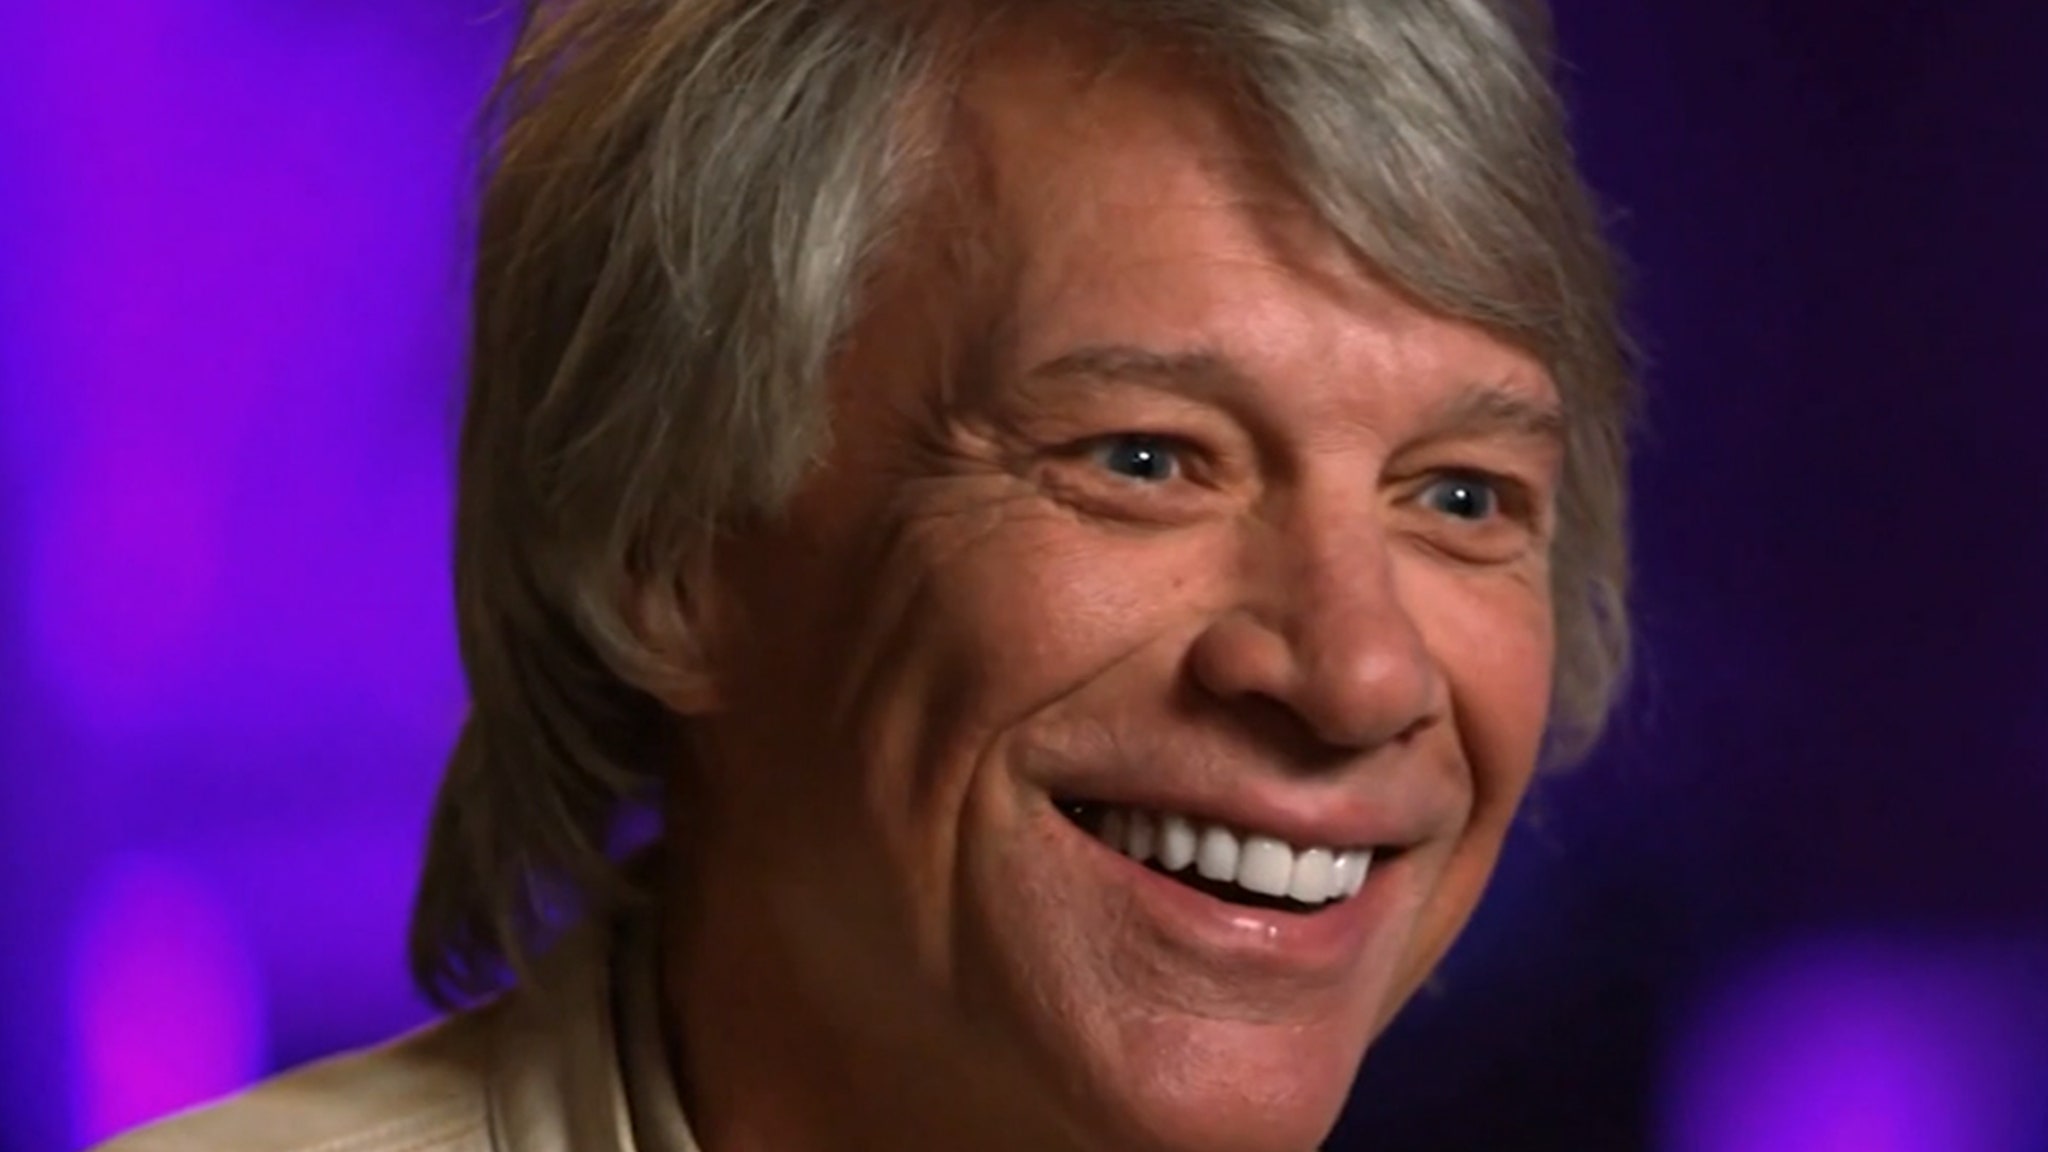 Jon Bon Jovi says he “got away with murder” during Rockstar's early days